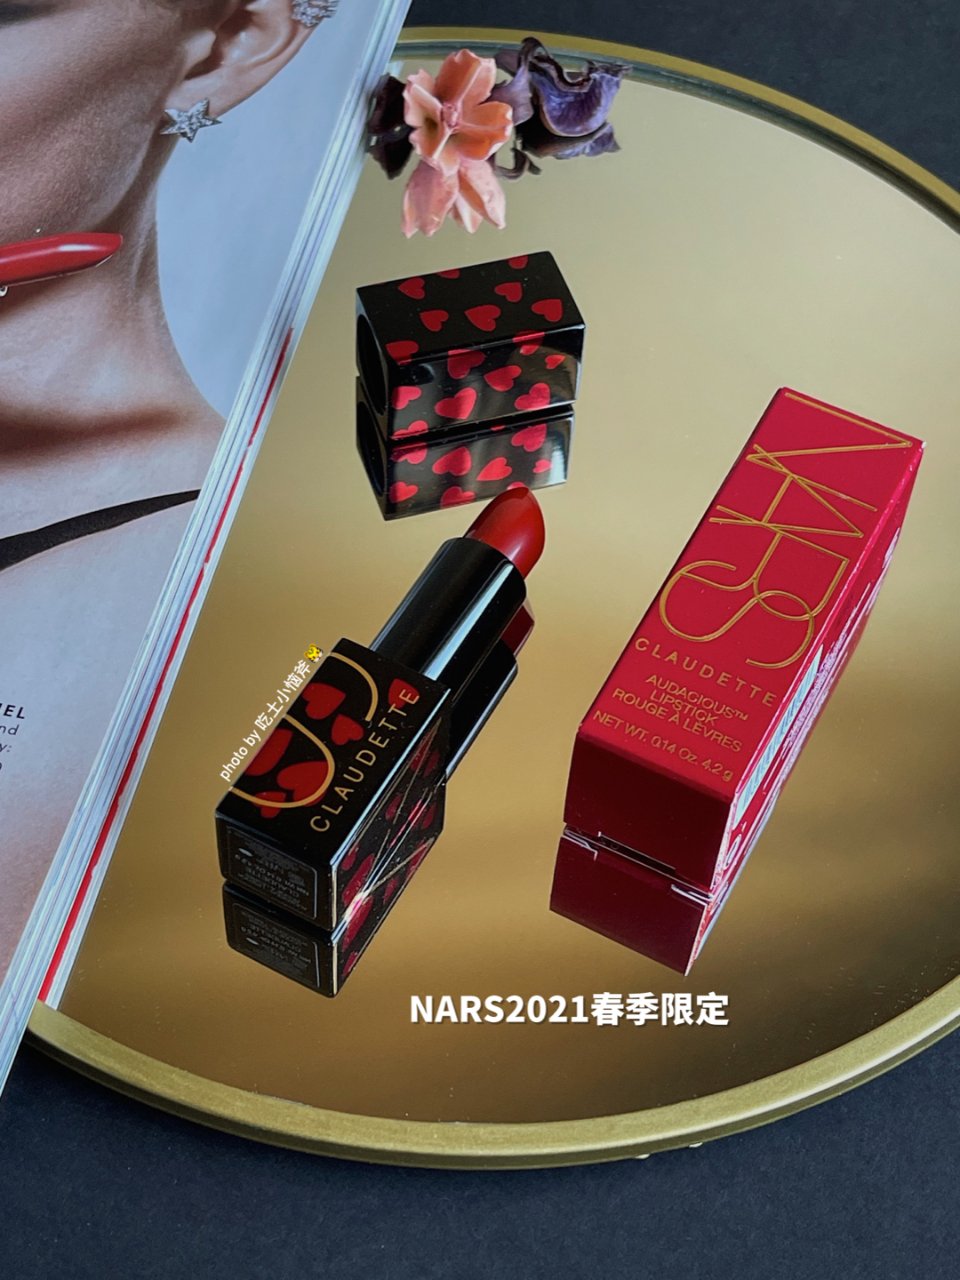 Limited Edition Audacious Lipstick | NARS Cosmetics